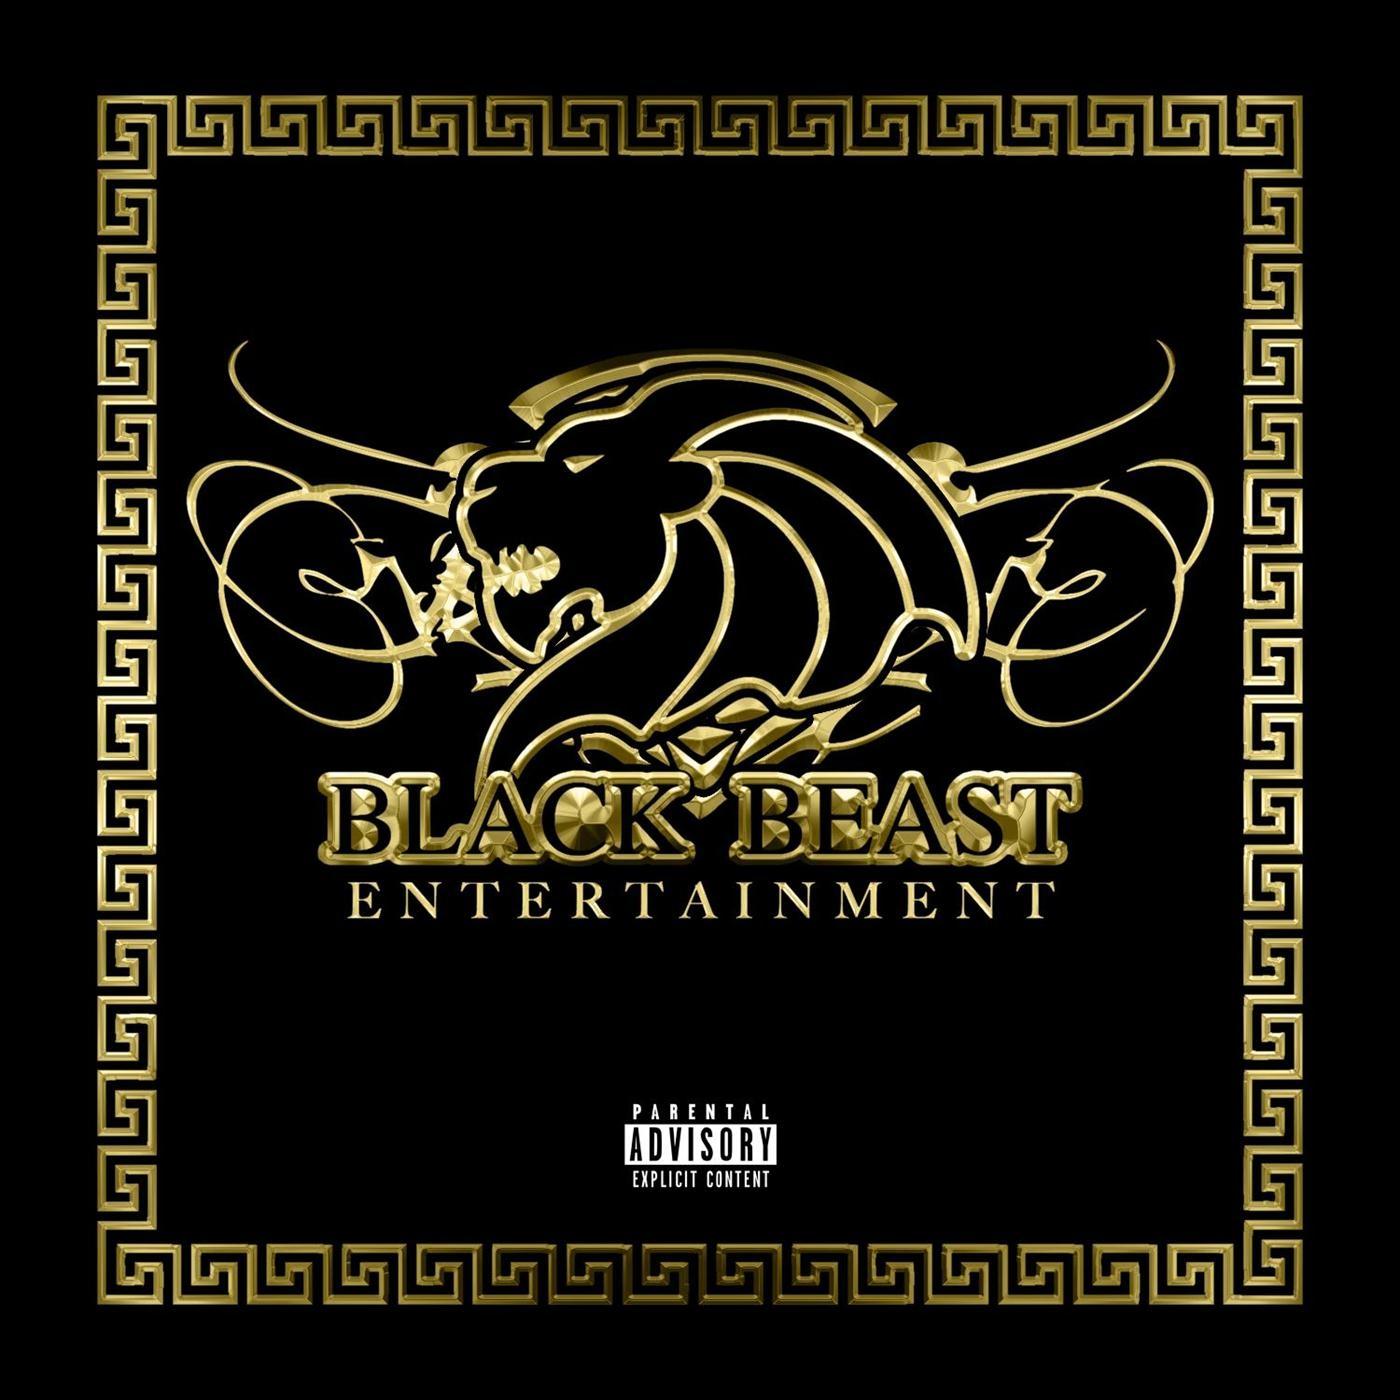 Black Beast Entertainment